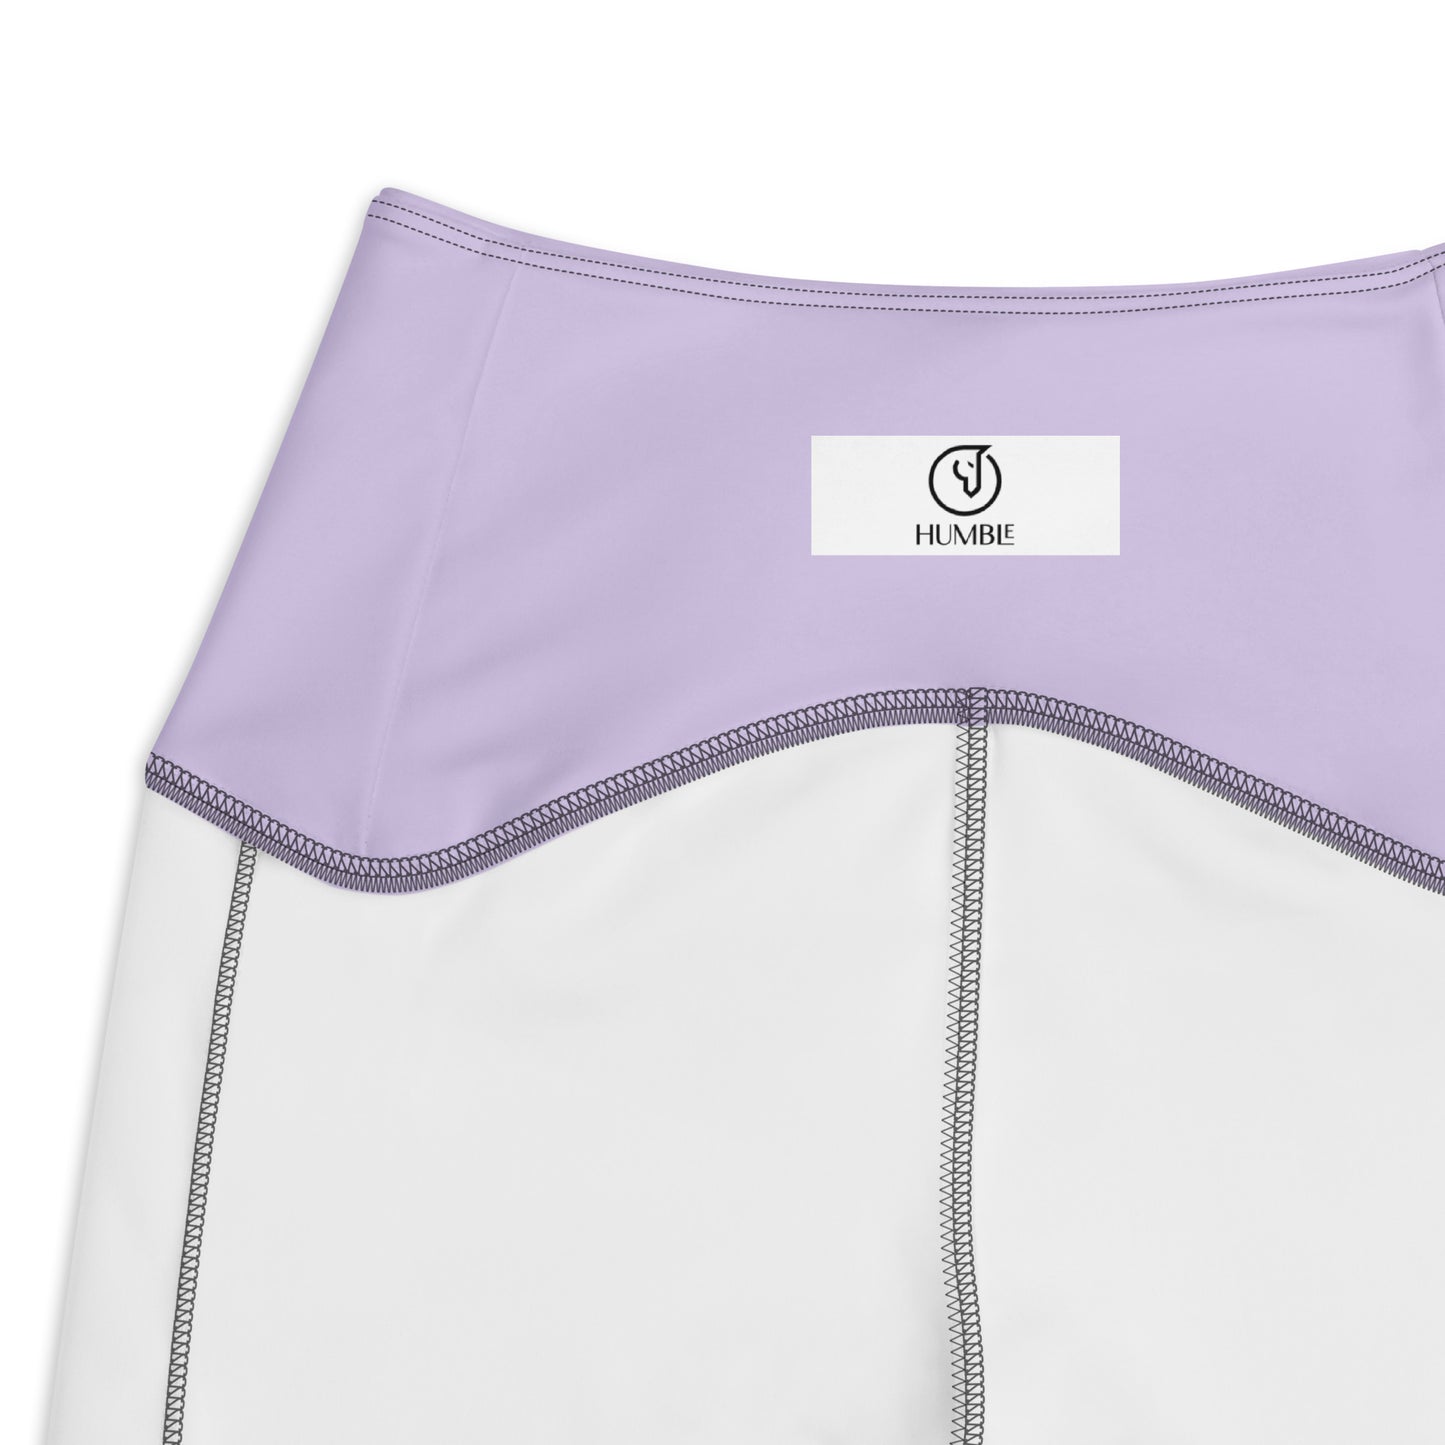 Humble Sportswear™ Women’s Purple Amethyst Active Compression Leggings - Mireille Fine Art